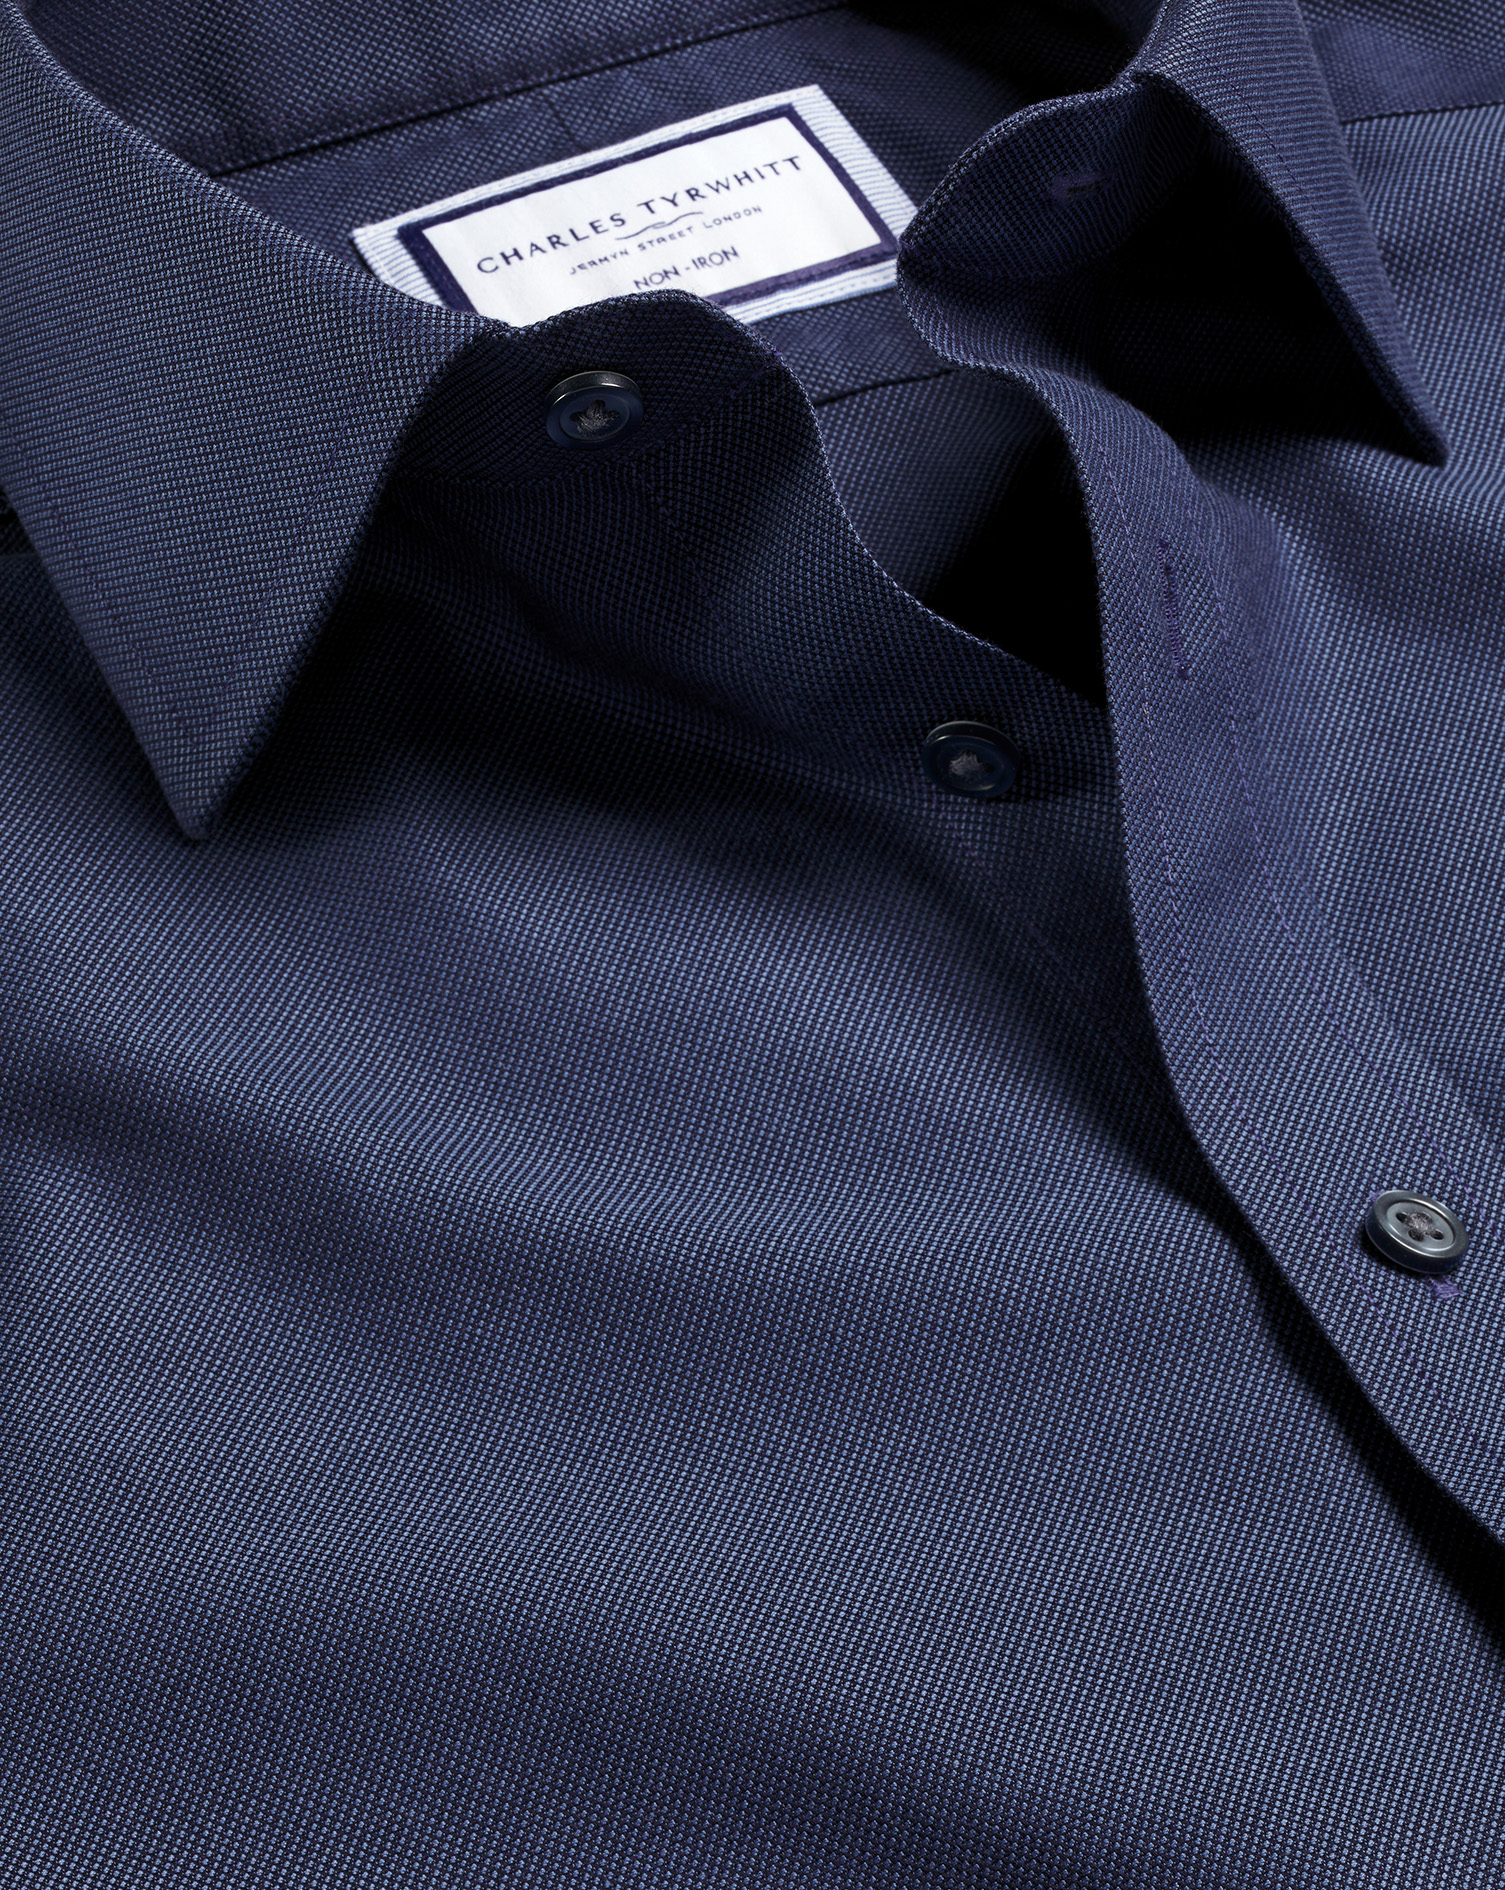 Men's Charles Tyrwhitt Non-Iron Royal Oxford Dress Shirt - French Blue Single Cuff Size 17/34 Cotton